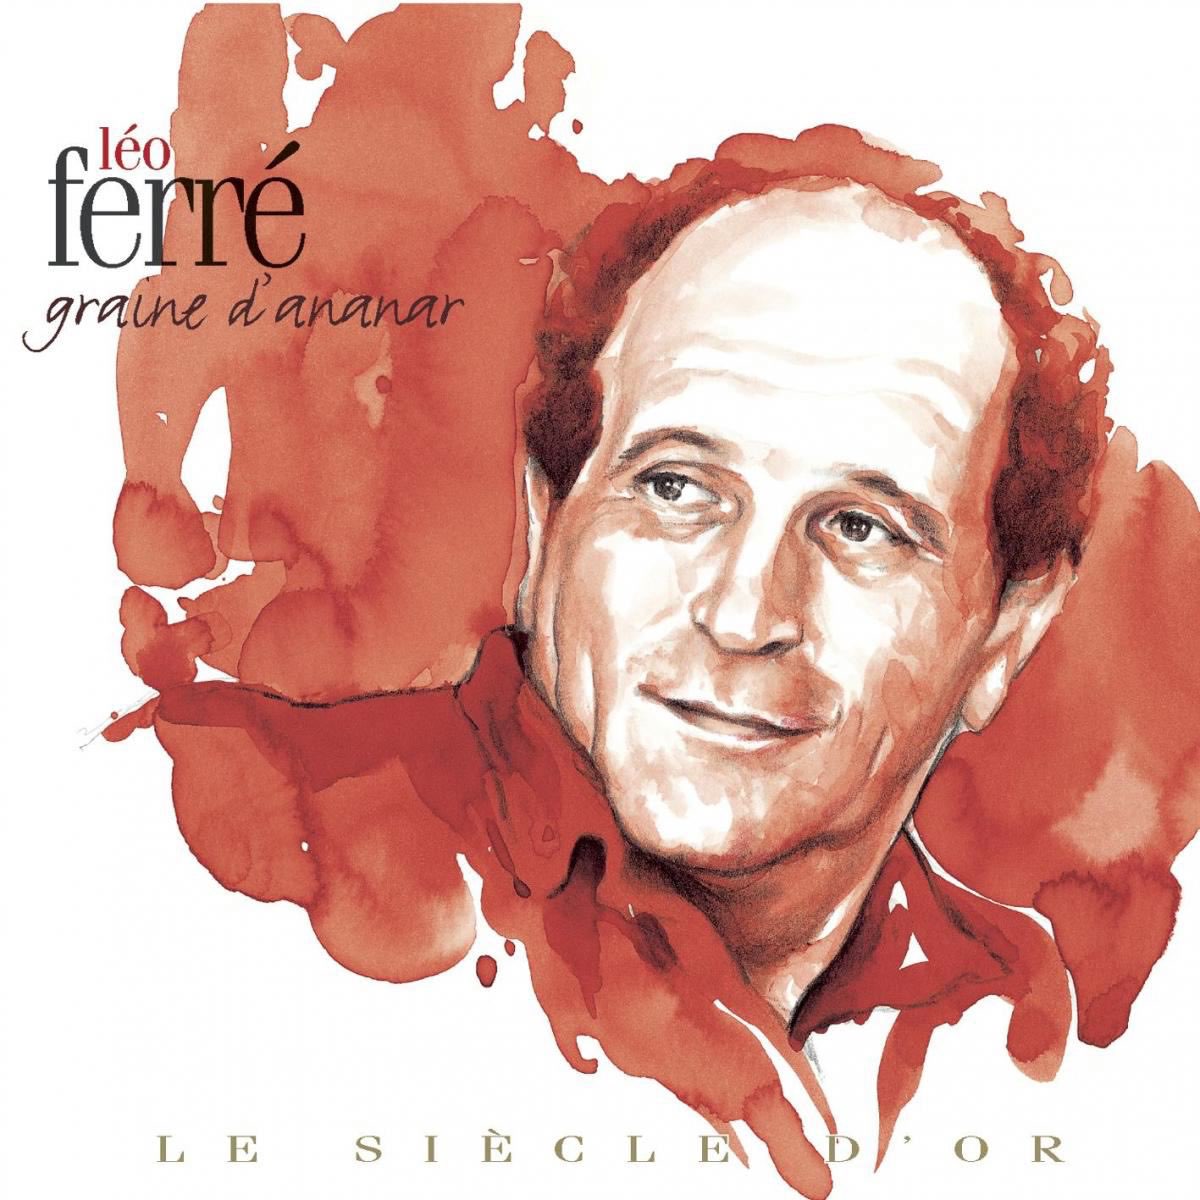 Léo Ferré в молодости